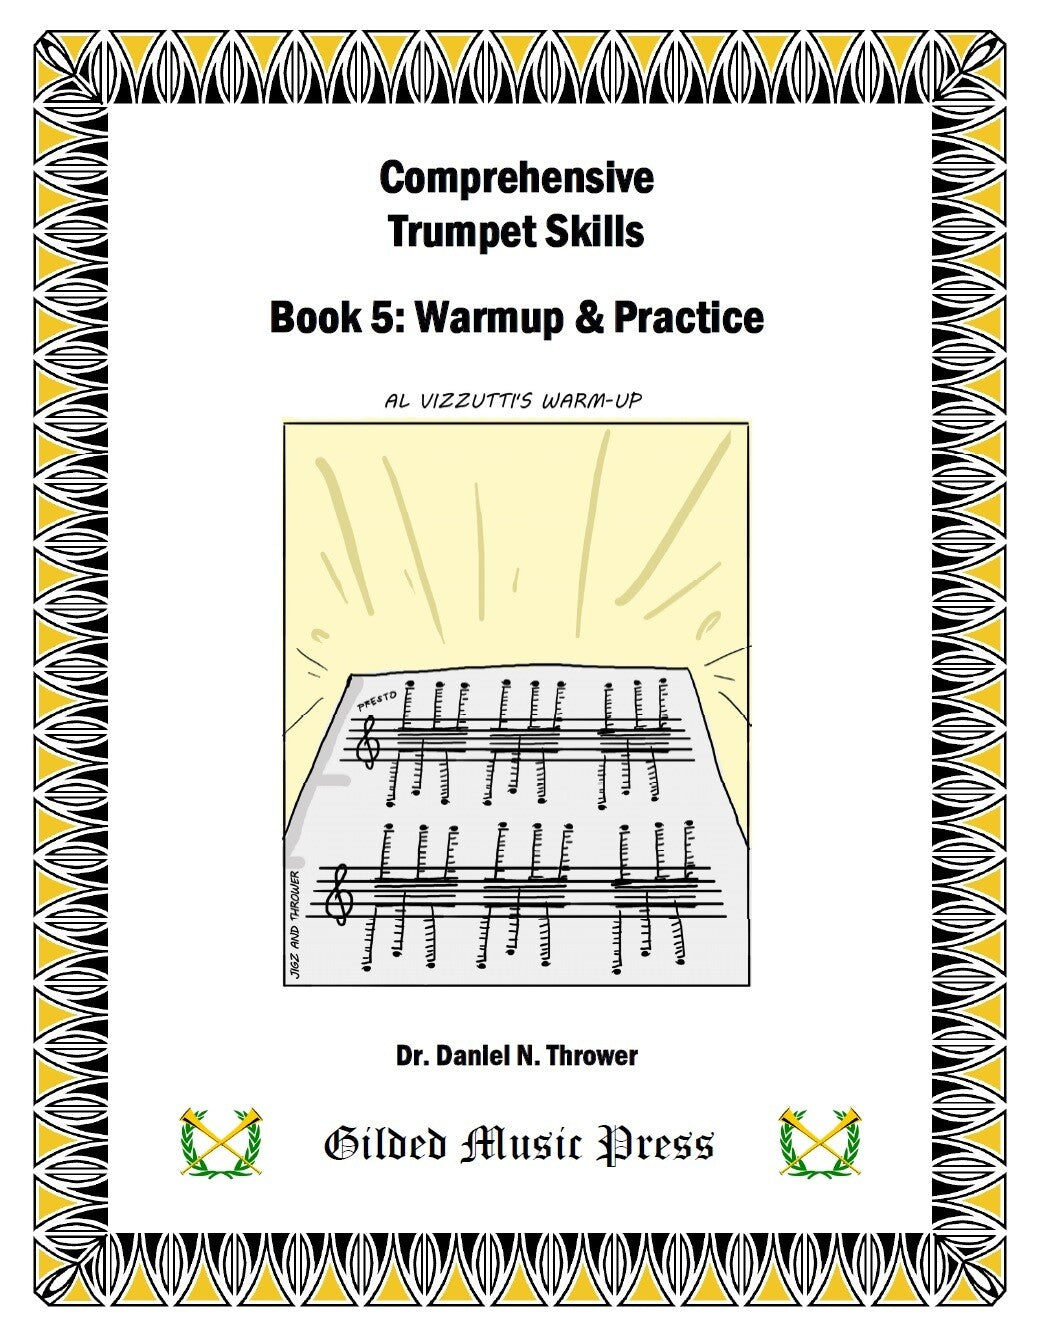 Comprehensive Trumpet Skills, Book 5: Warmup & Practice, Dr. Daniel Thrower